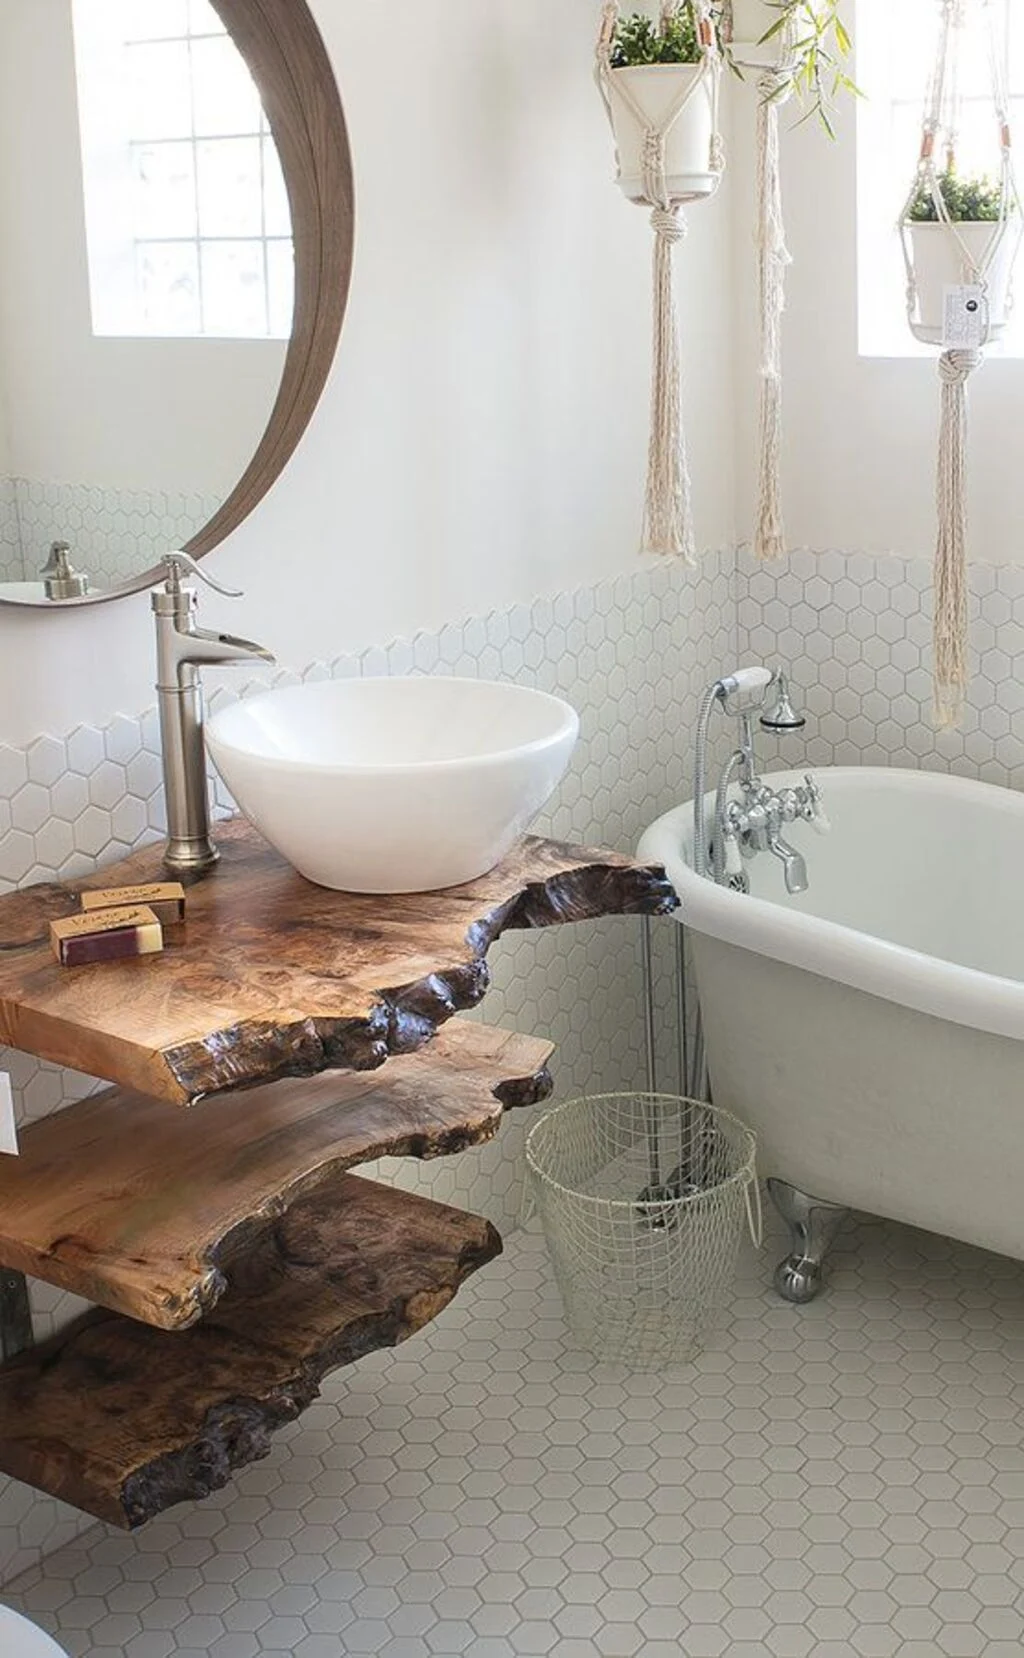 A bathroom with a sink and a bathtub
with live edge table